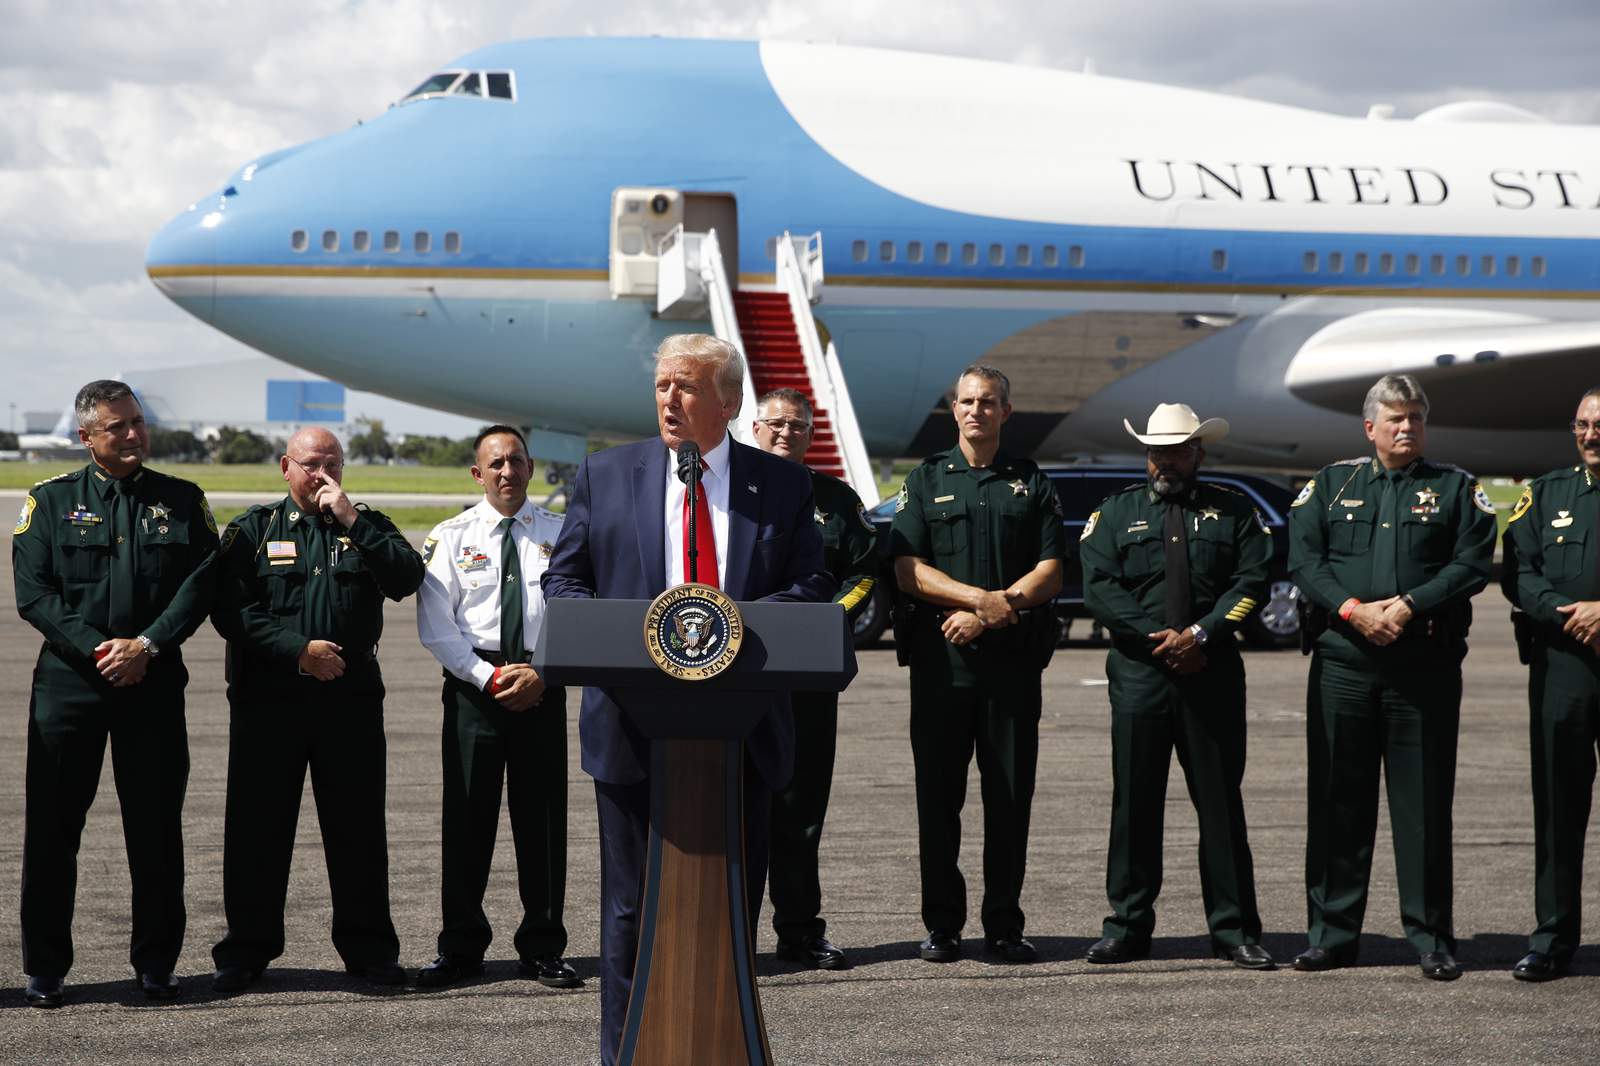 Trump visiting Florida during a pandemic, hurricane threat